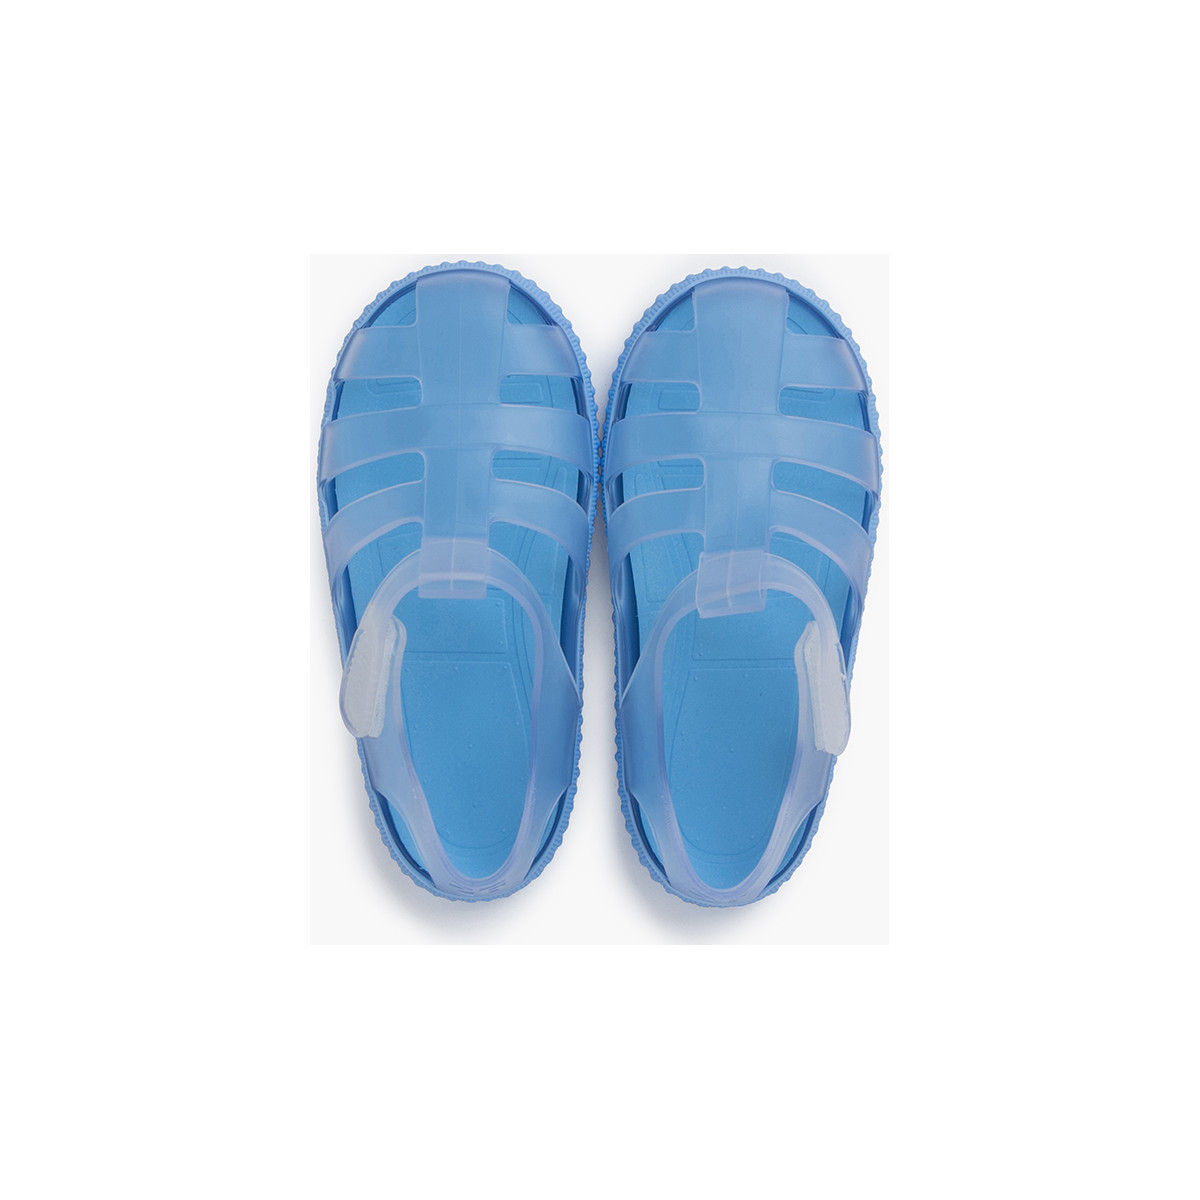 Pisamonas Bleu Sandales plage à semelle colorée type tennis Yt7wEFEV